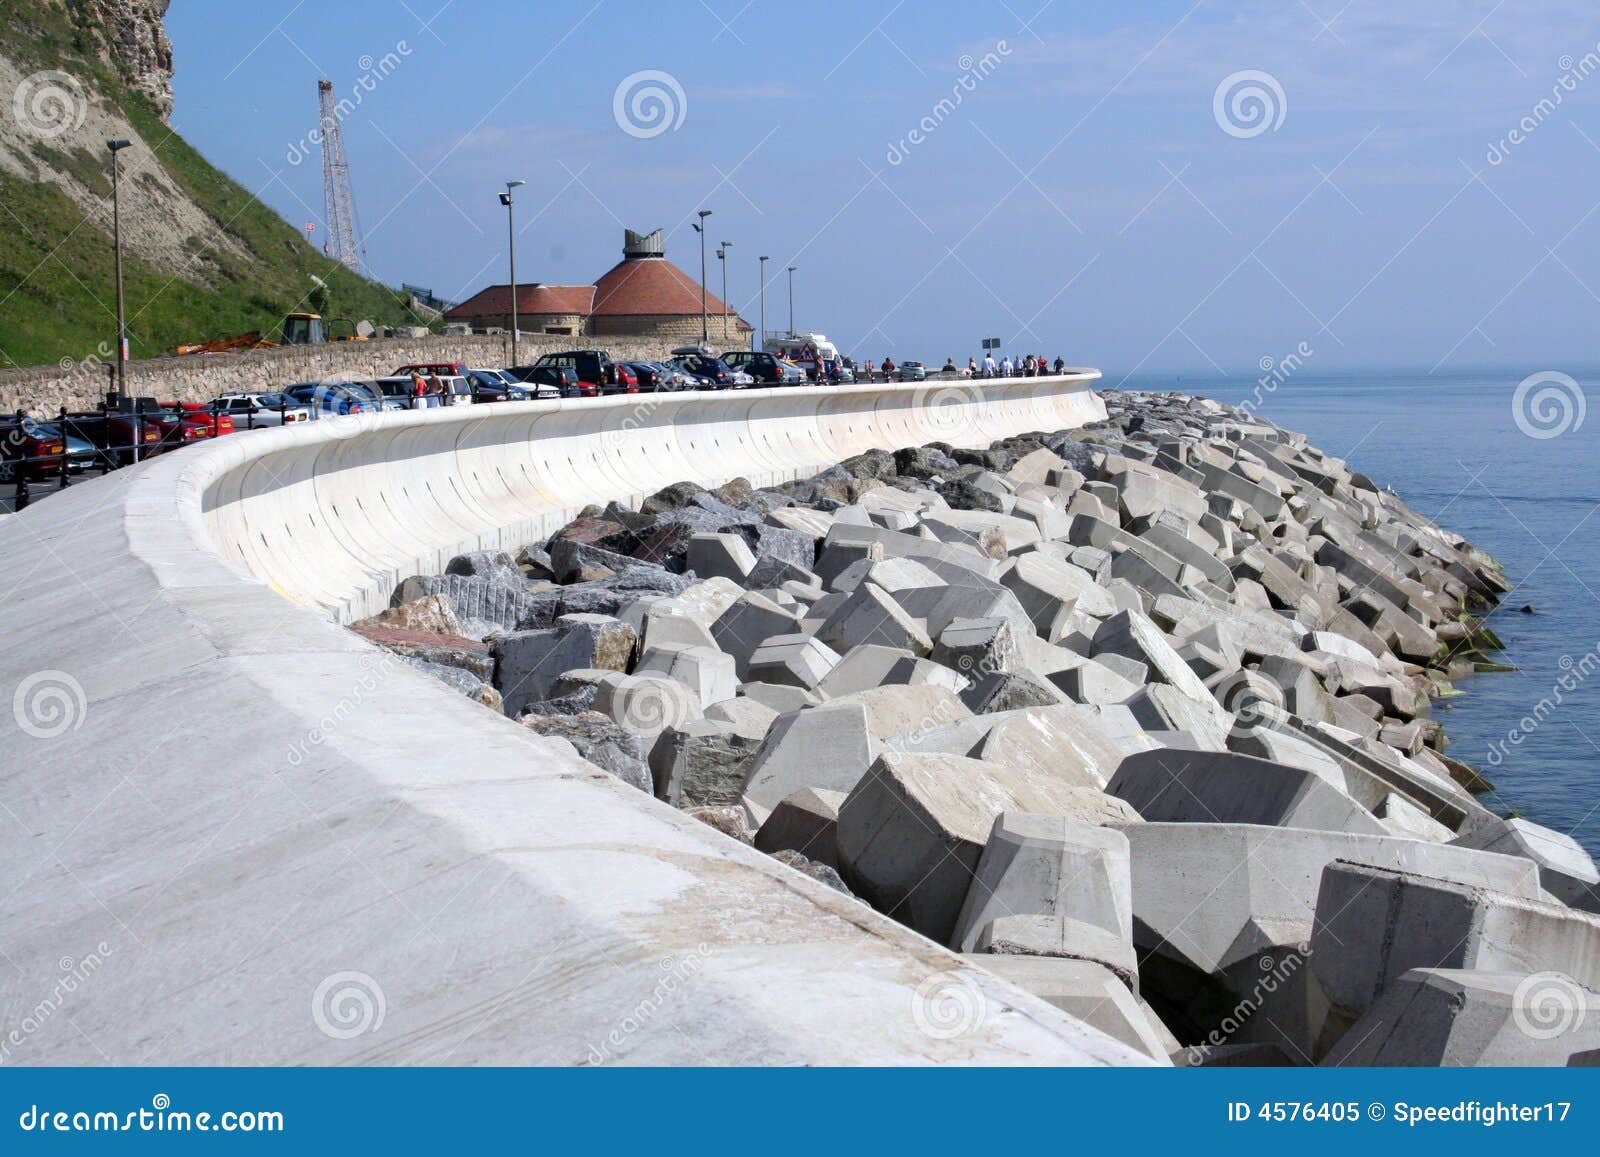 coatal erosion defences